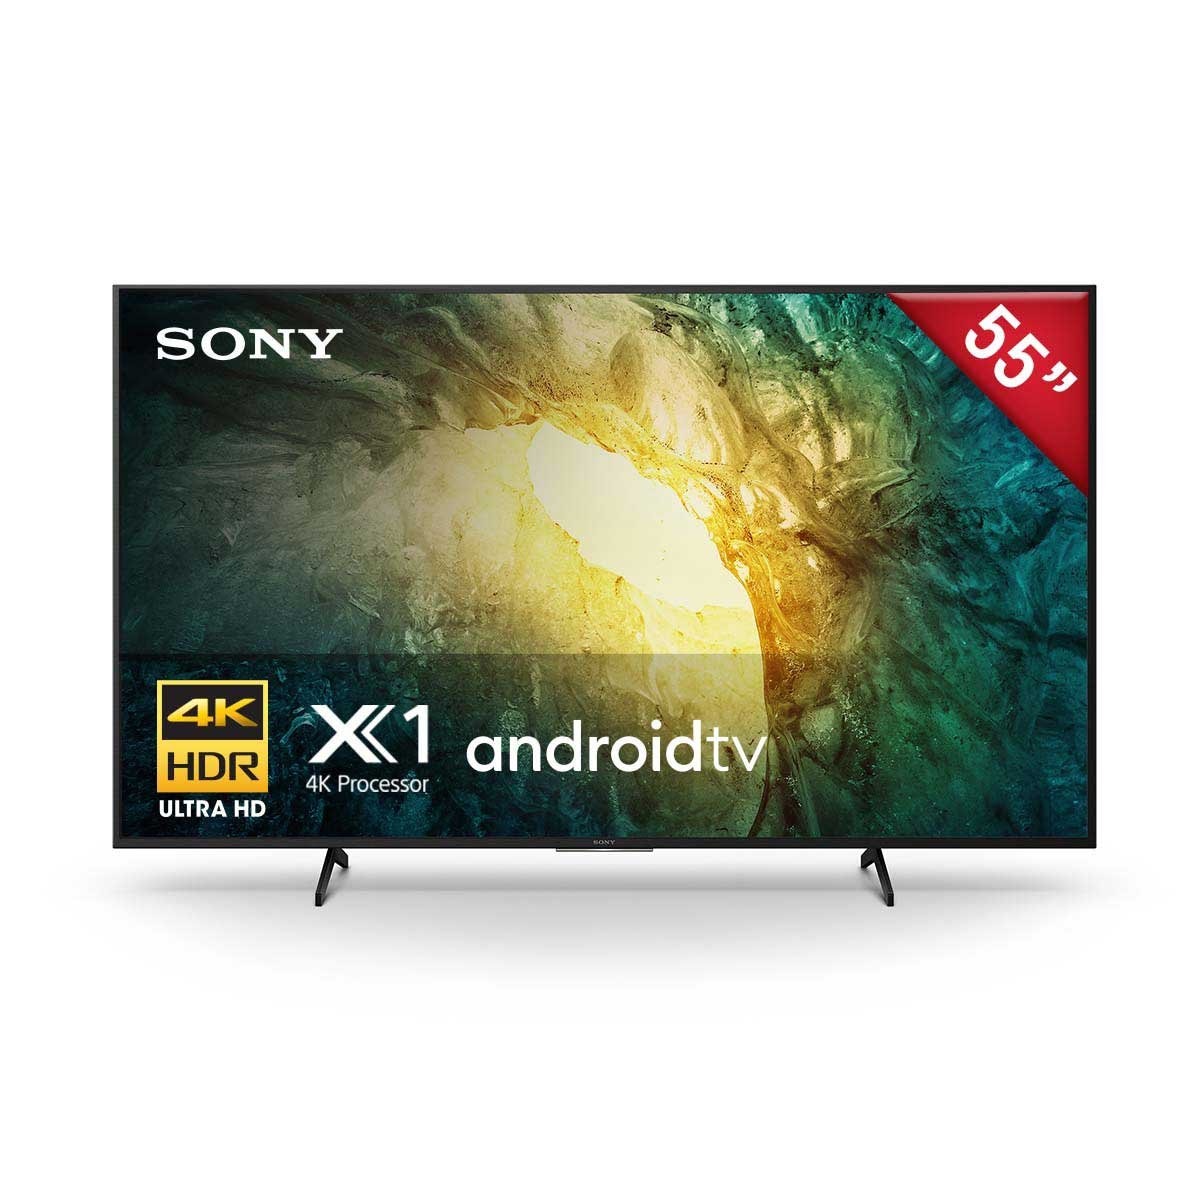 Pantalla Sony 55" 4K Uhd Android Tv Xbr-55X750H